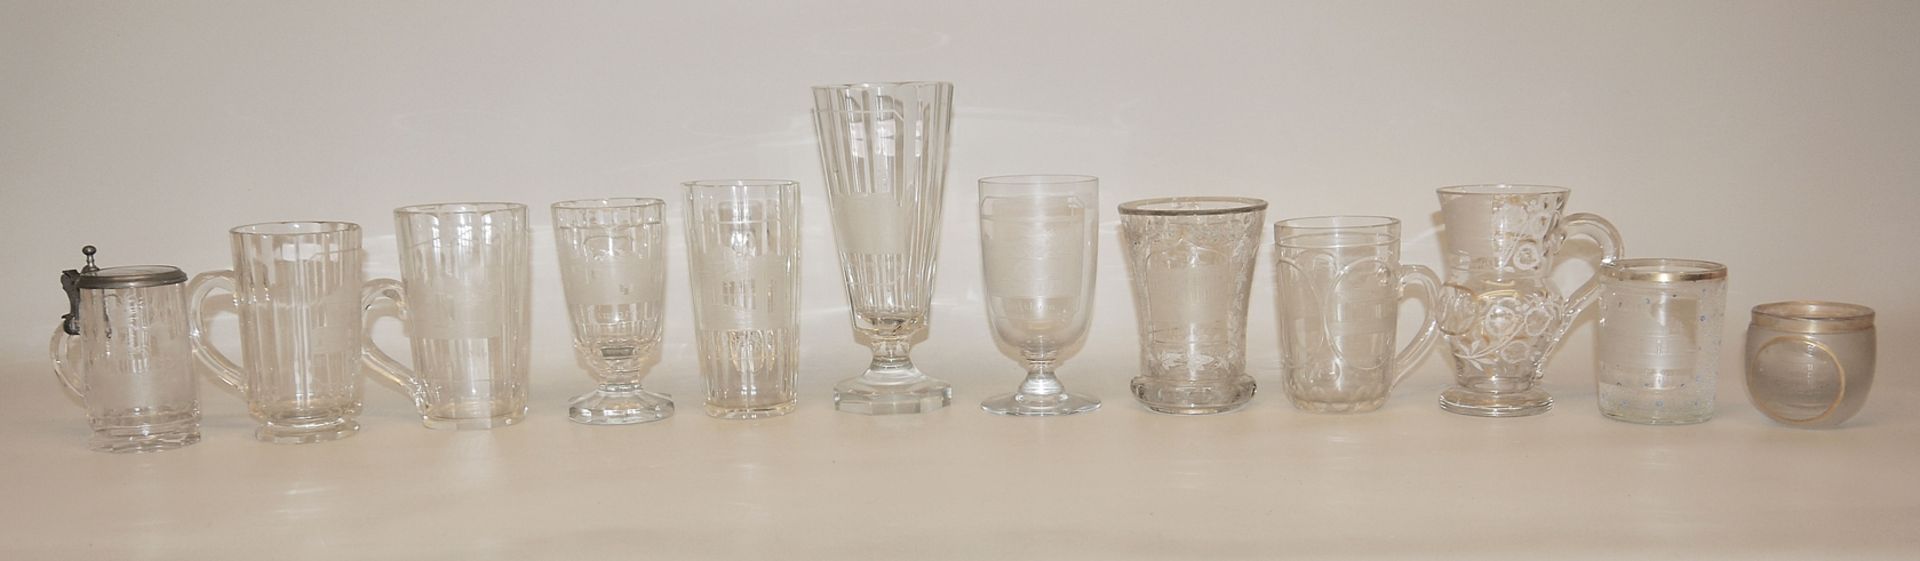 12 view and spa glasses, Bohemia, 1840-80